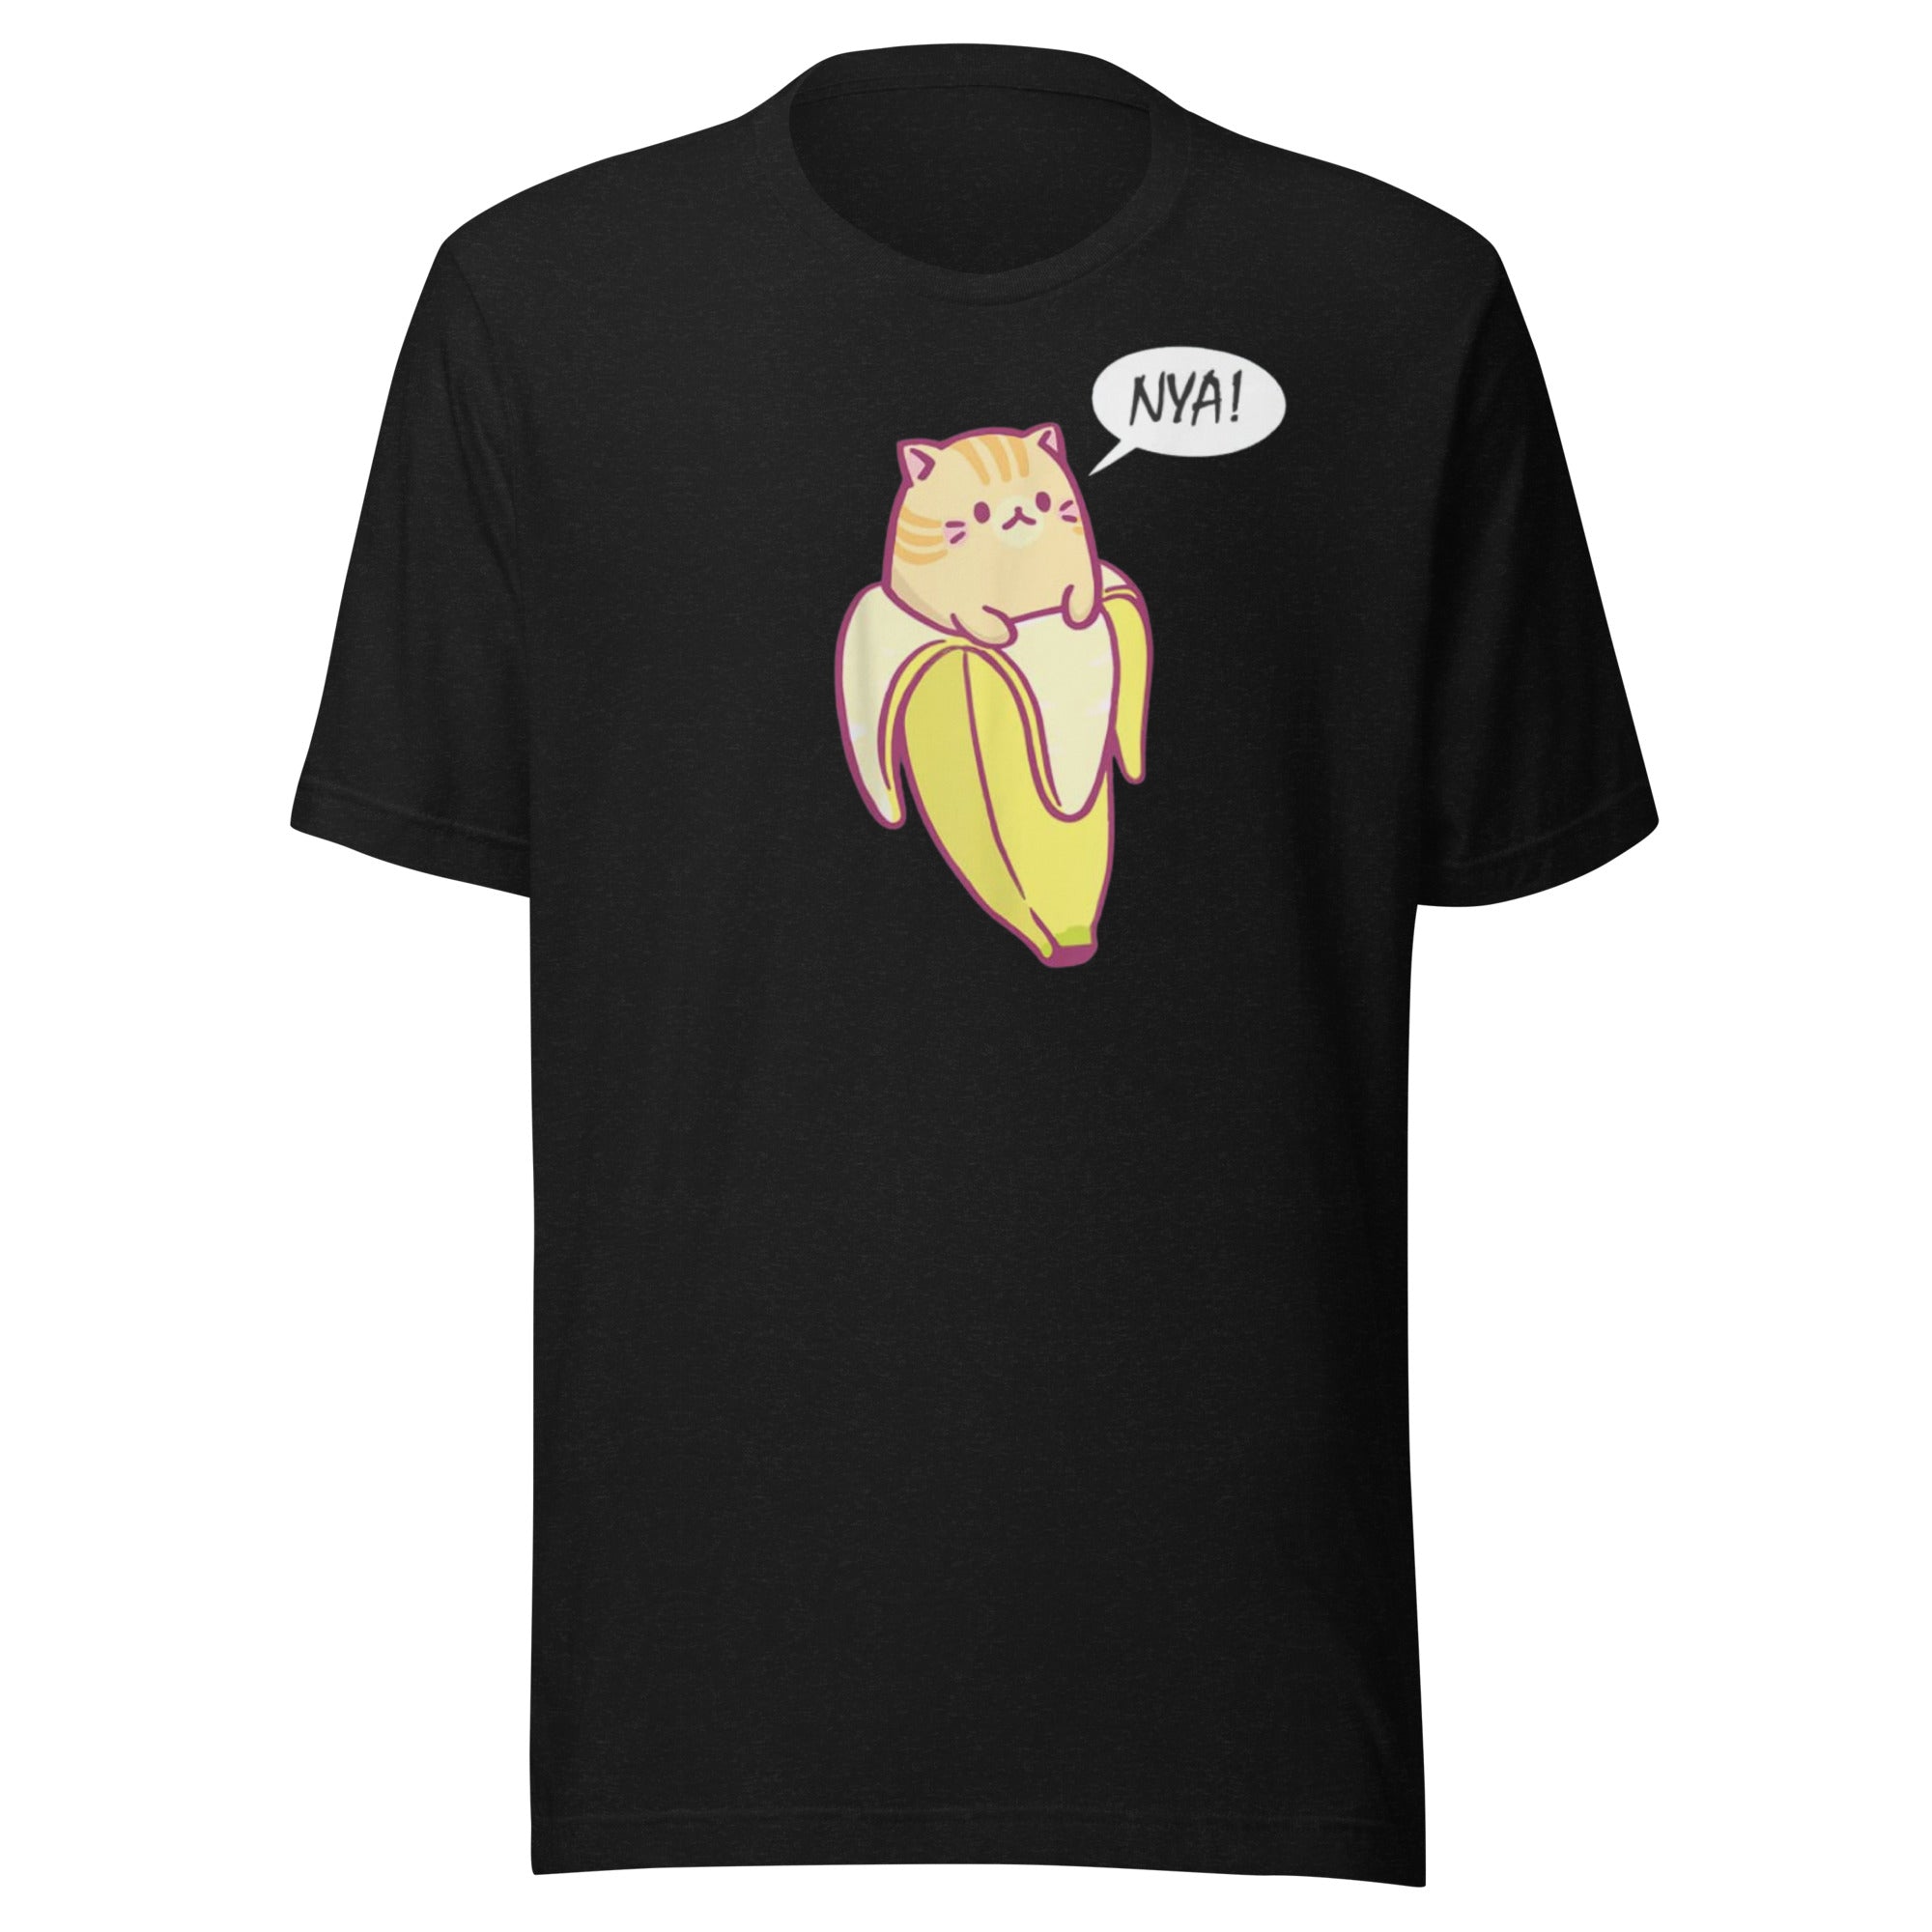 Banana cat shirt